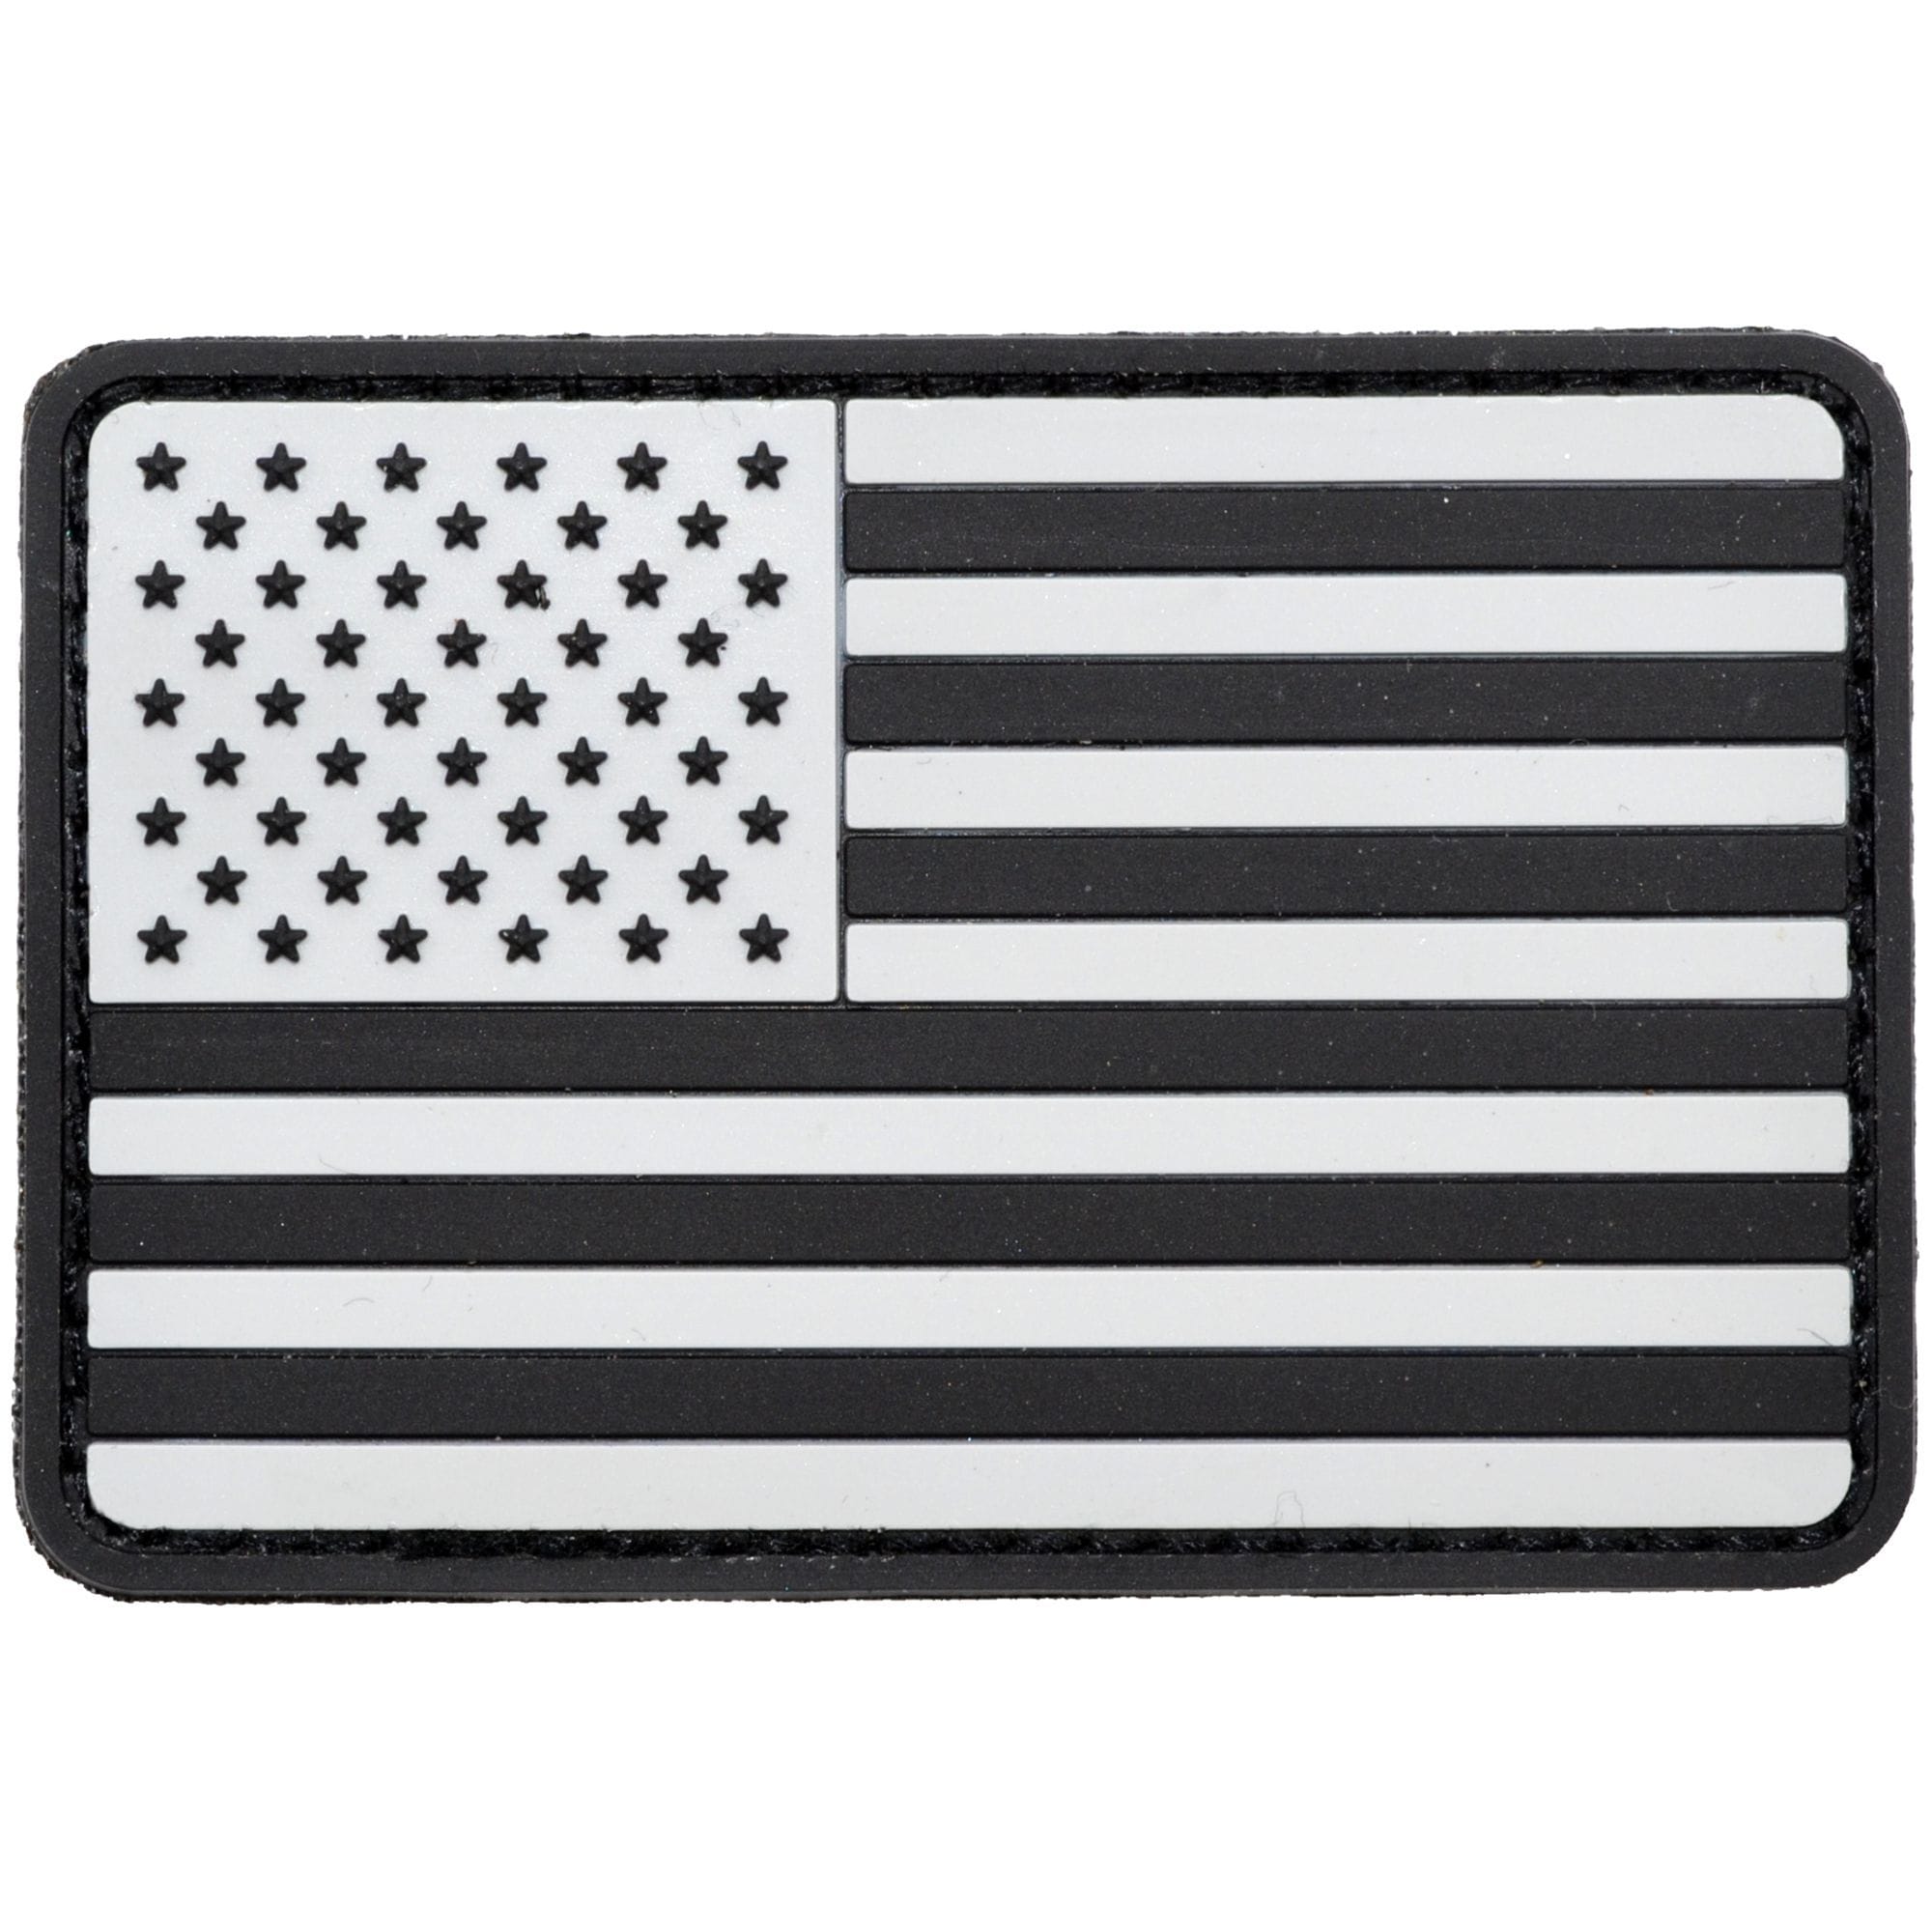 American Flag Patch - 3-1/2 x 2-1/8 Left Shoulder White Border